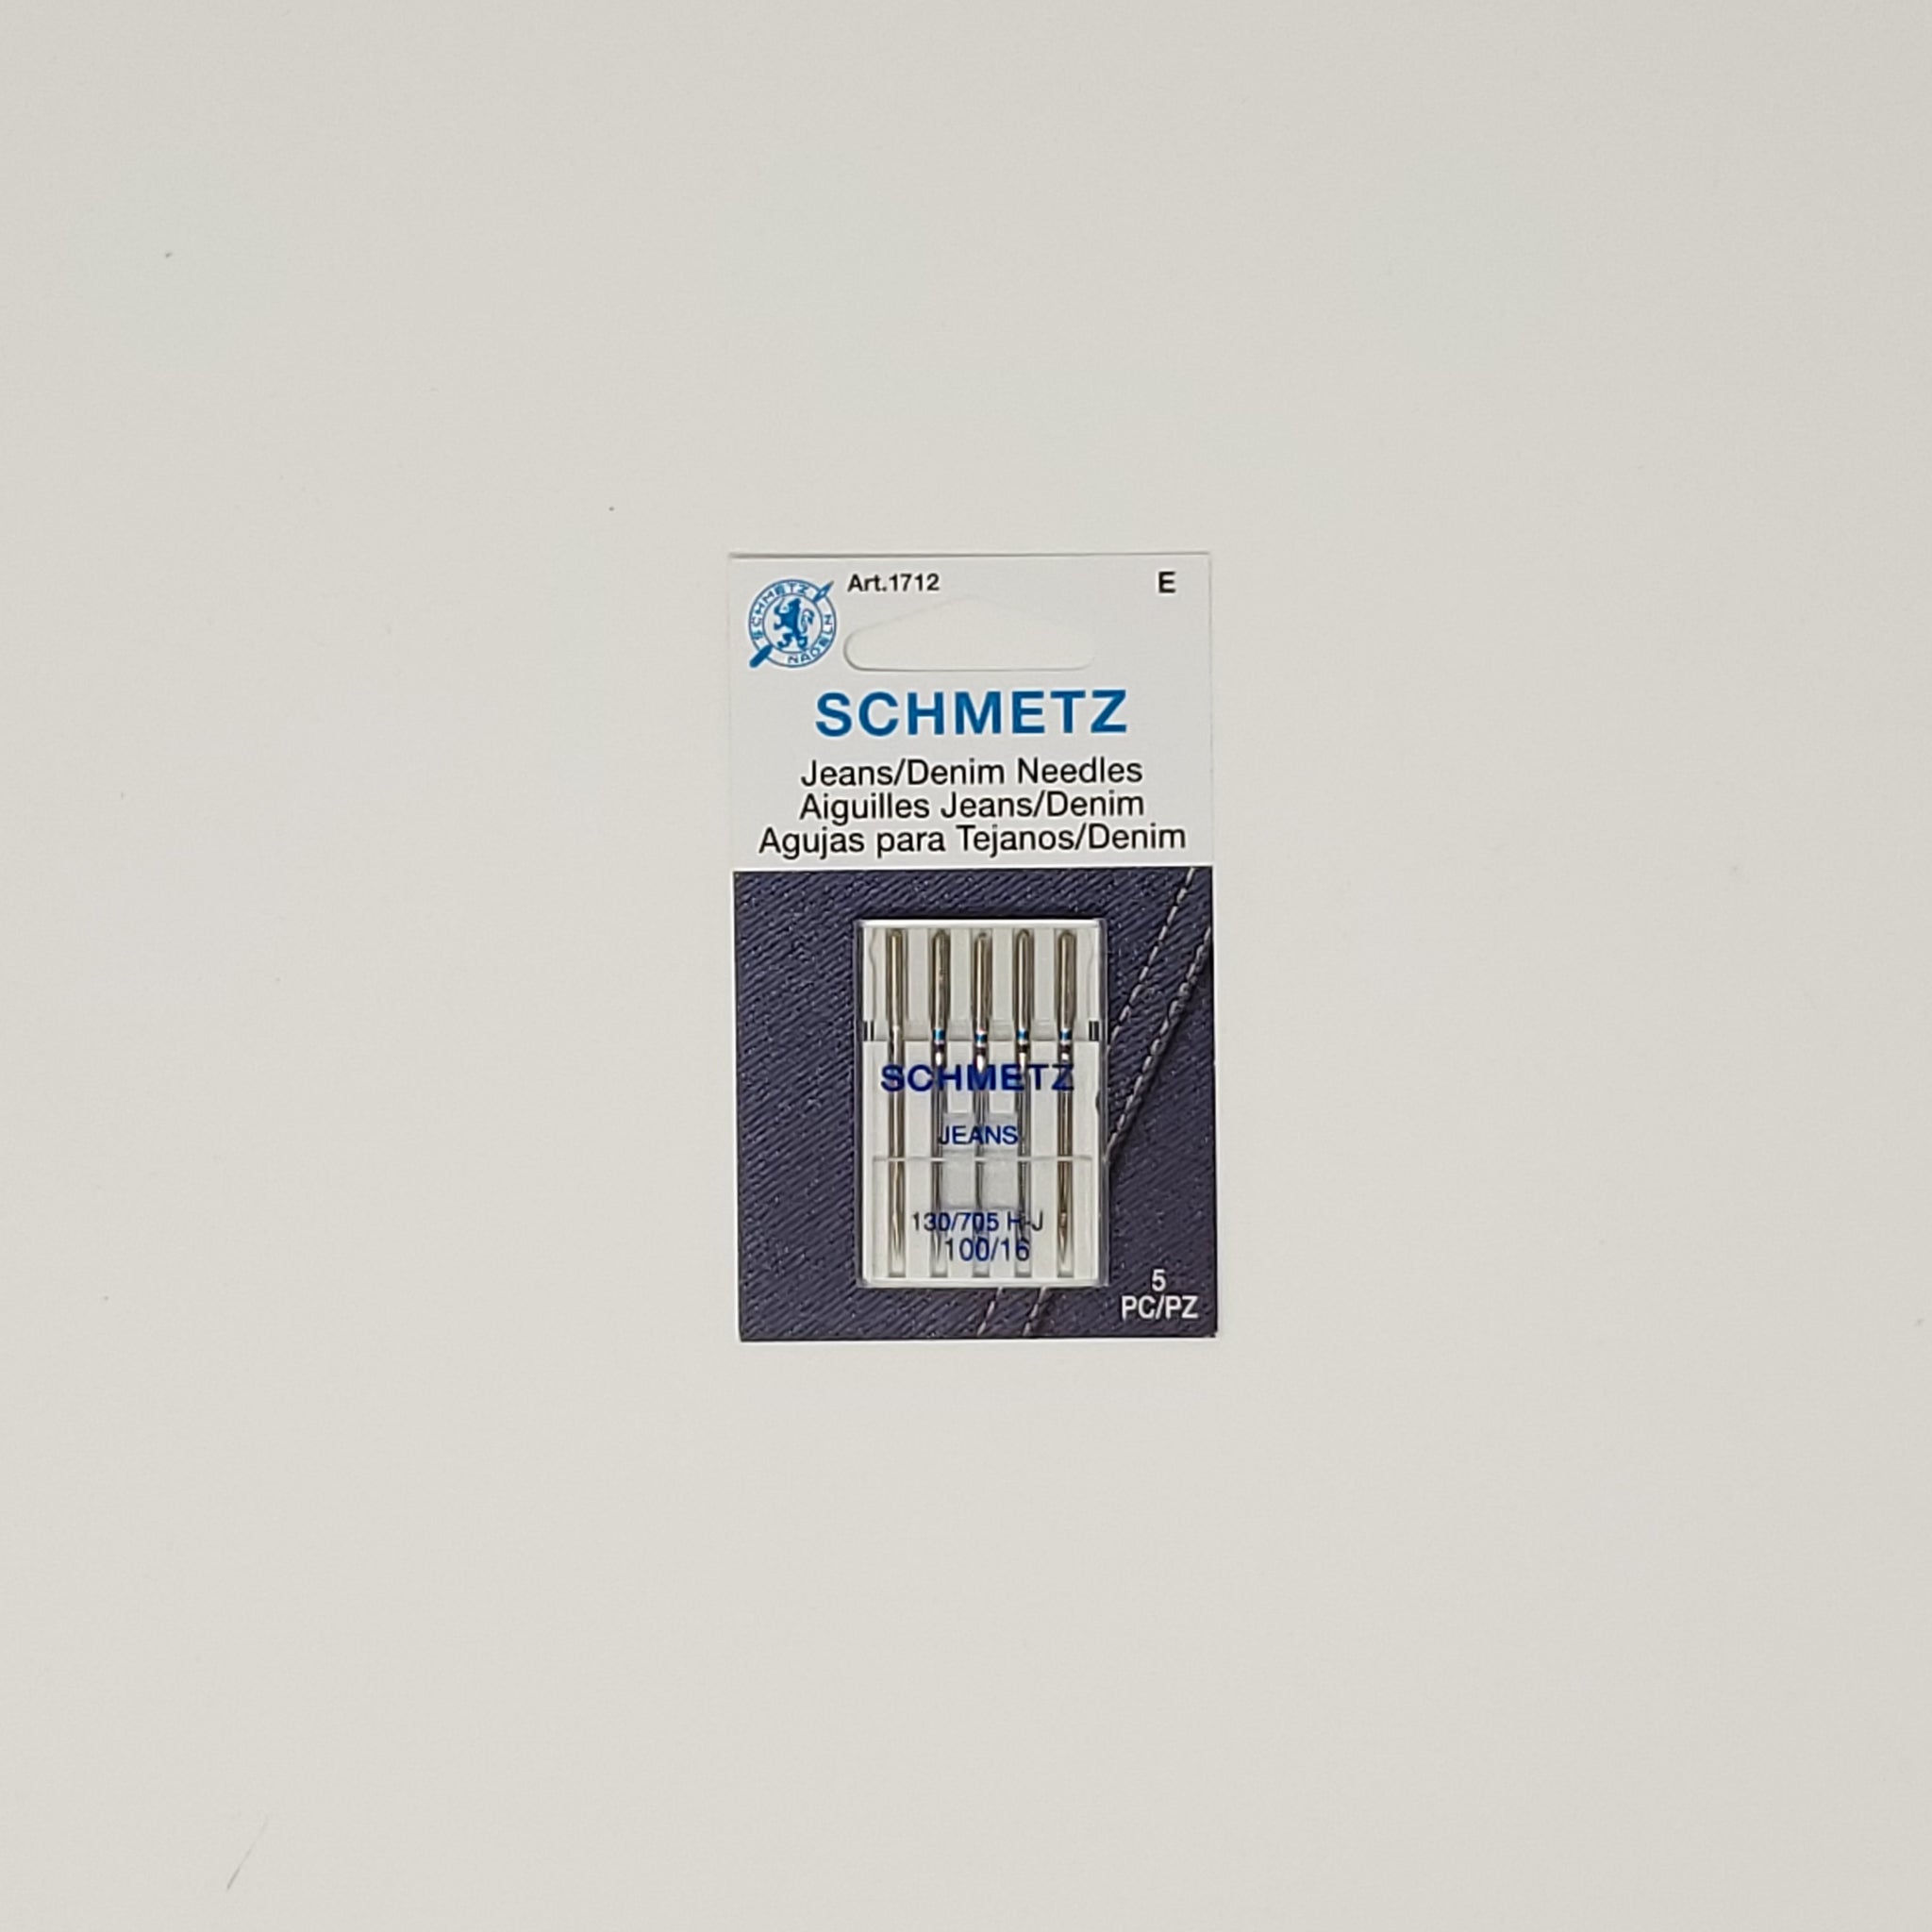 Schmetz - Denim/Jeans needles (5) - Size 100/16